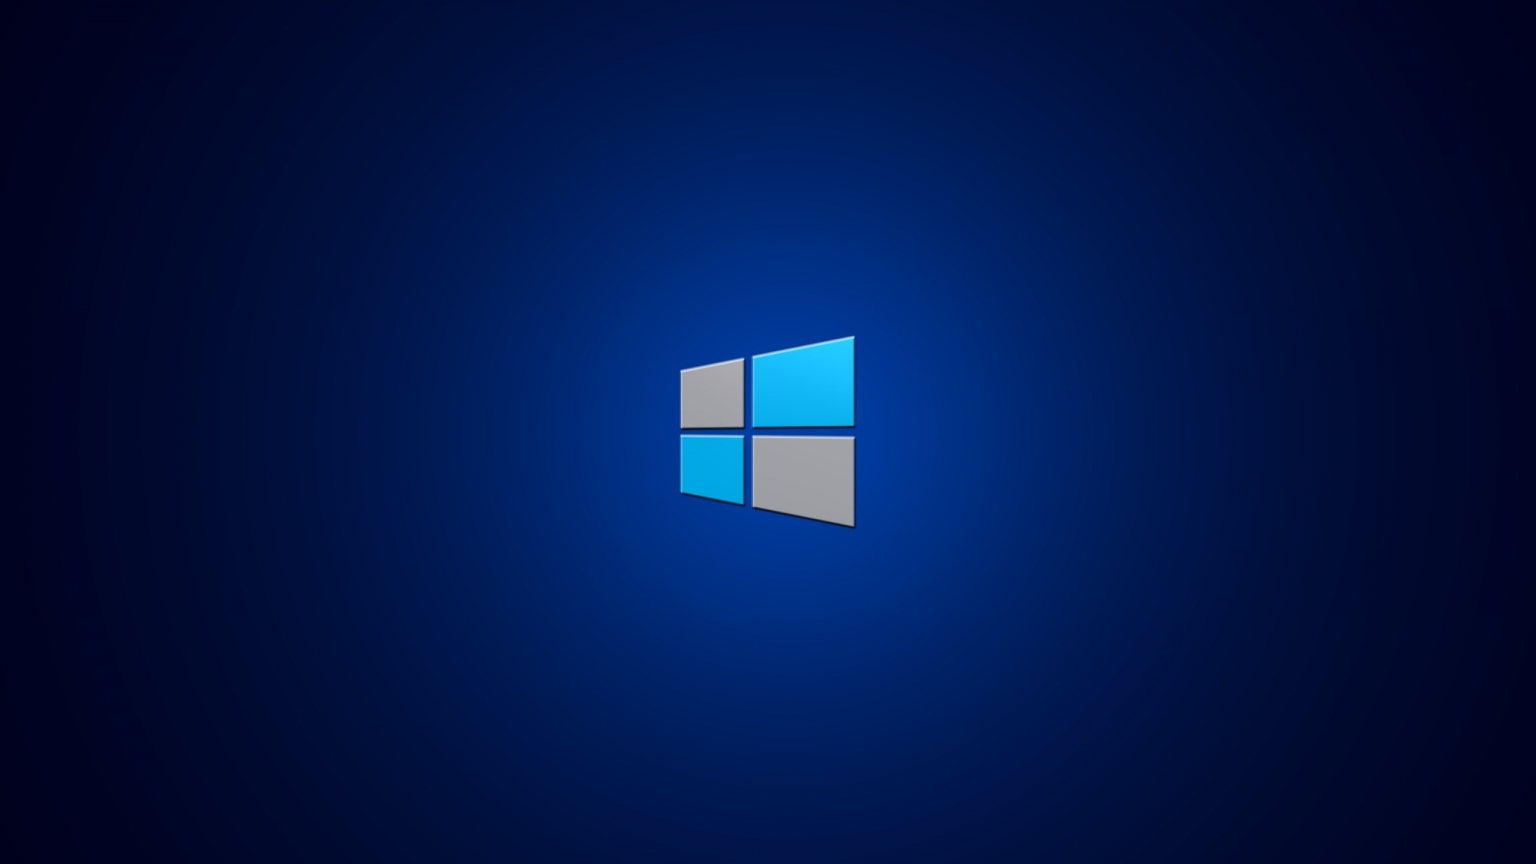 Windows 8 Background for 1536 x 864 HDTV resolution